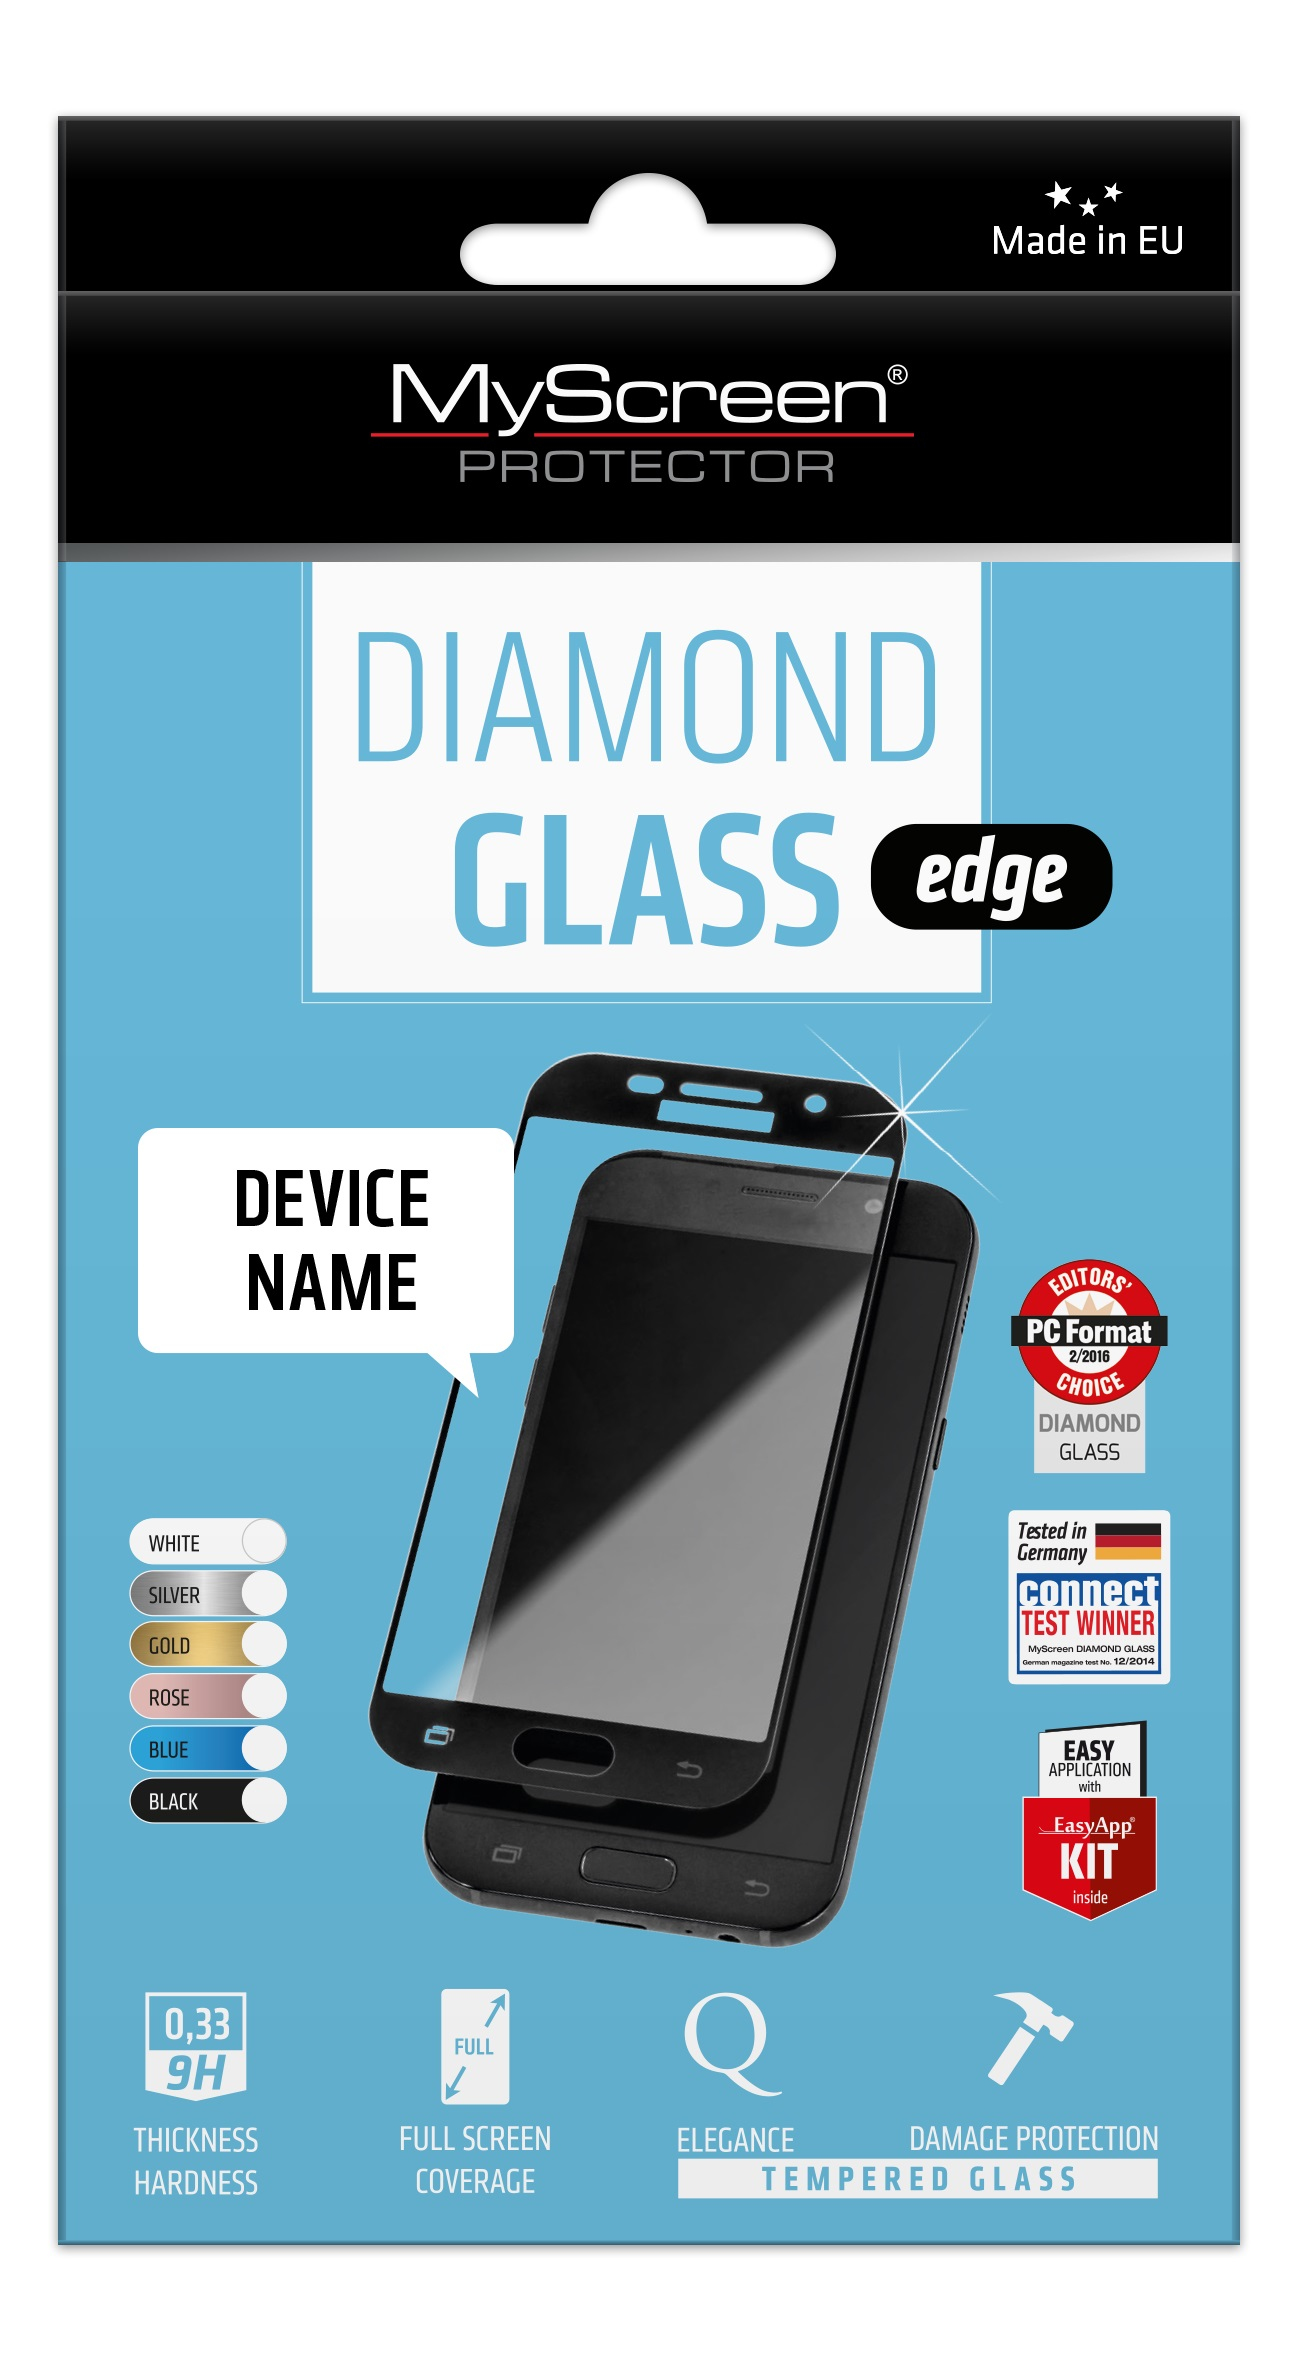 My Screen Protector Diamond Glass edge 3d - Bildschirmschutz für Handy